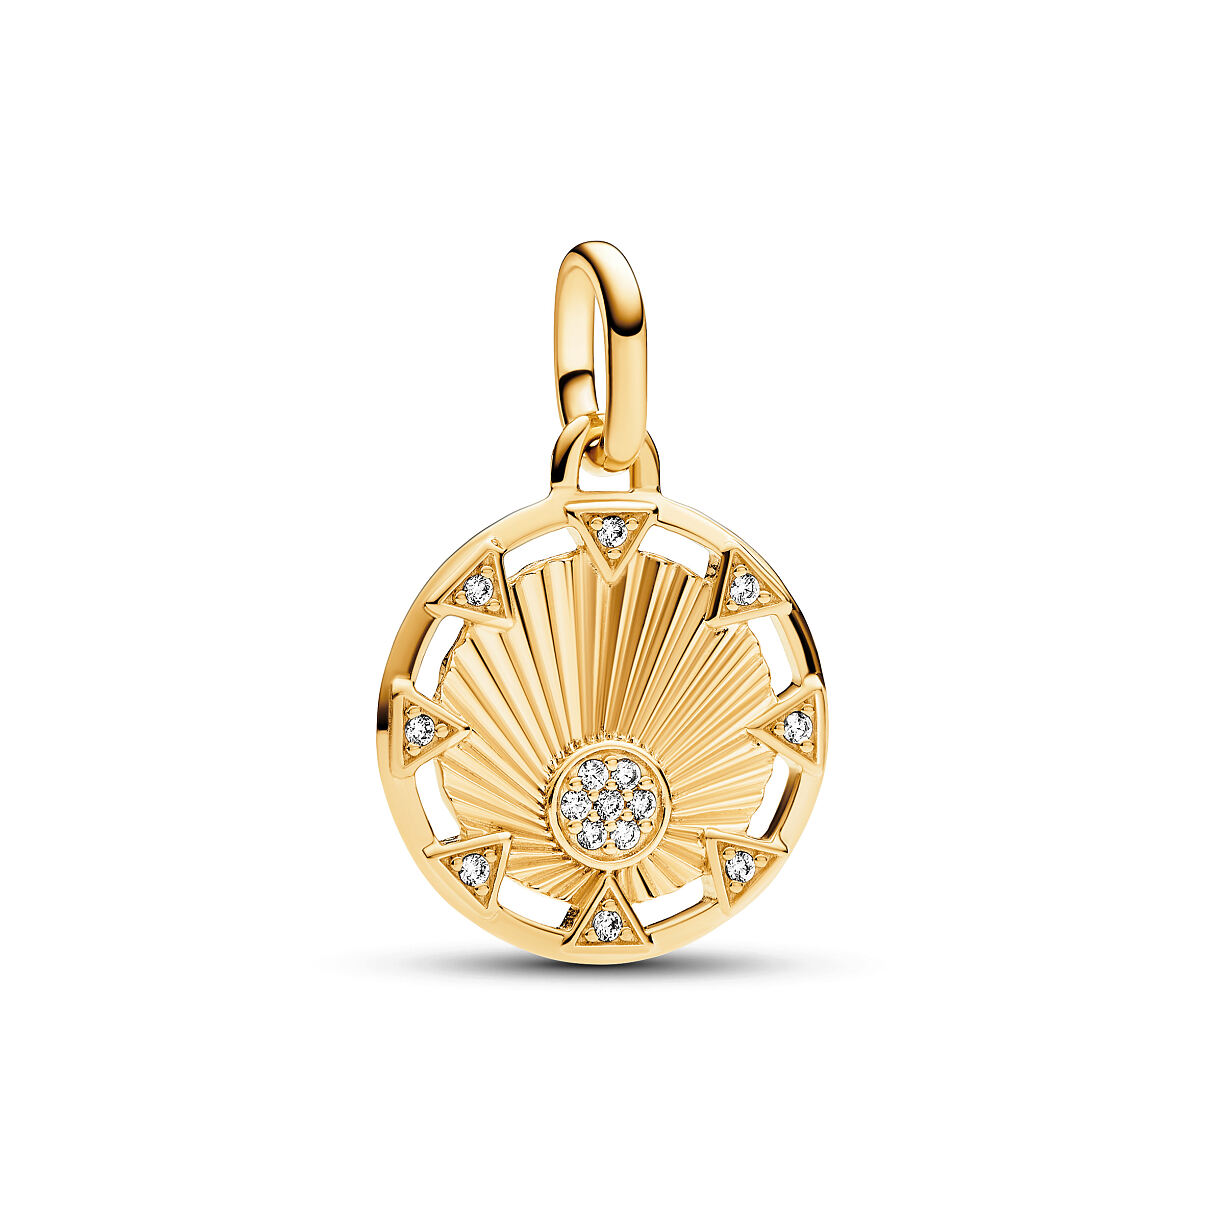 Pandora_Medallion_14k Gold-plated_Cubic Zirconia_763039C01_55,00 Euro (2)